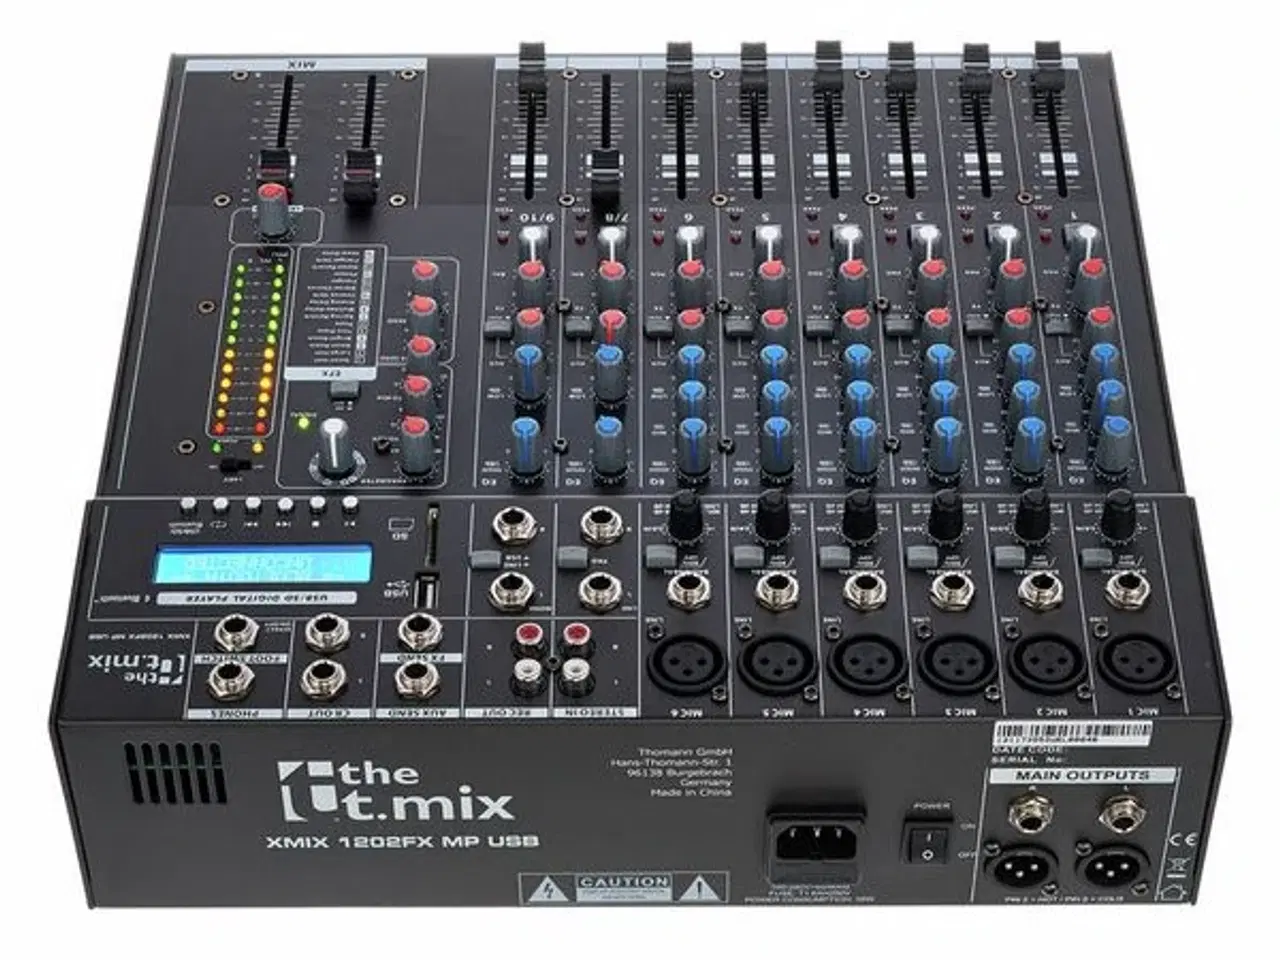 Billede 2 - the t.mix xmix 1202 FXMP USB sælges.